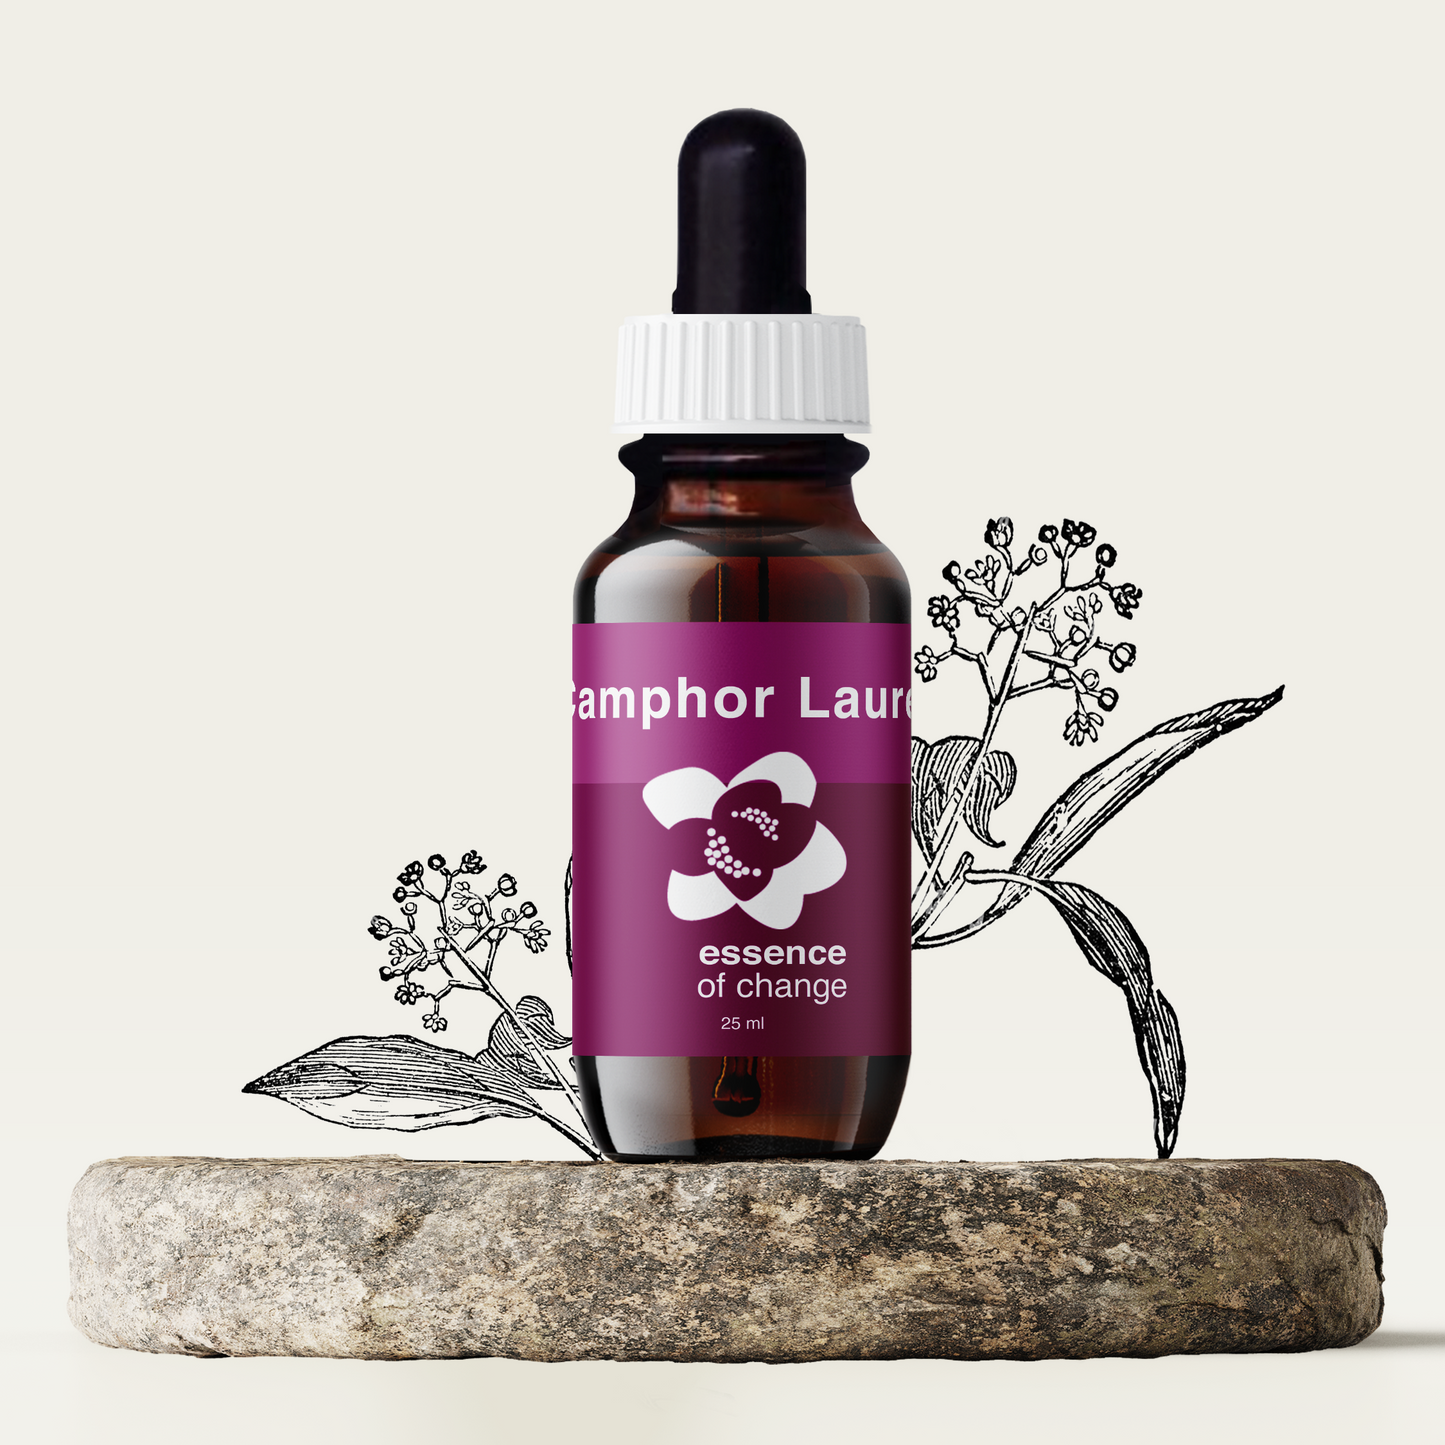 Camphor Laurel Flower Essence - Contemplation